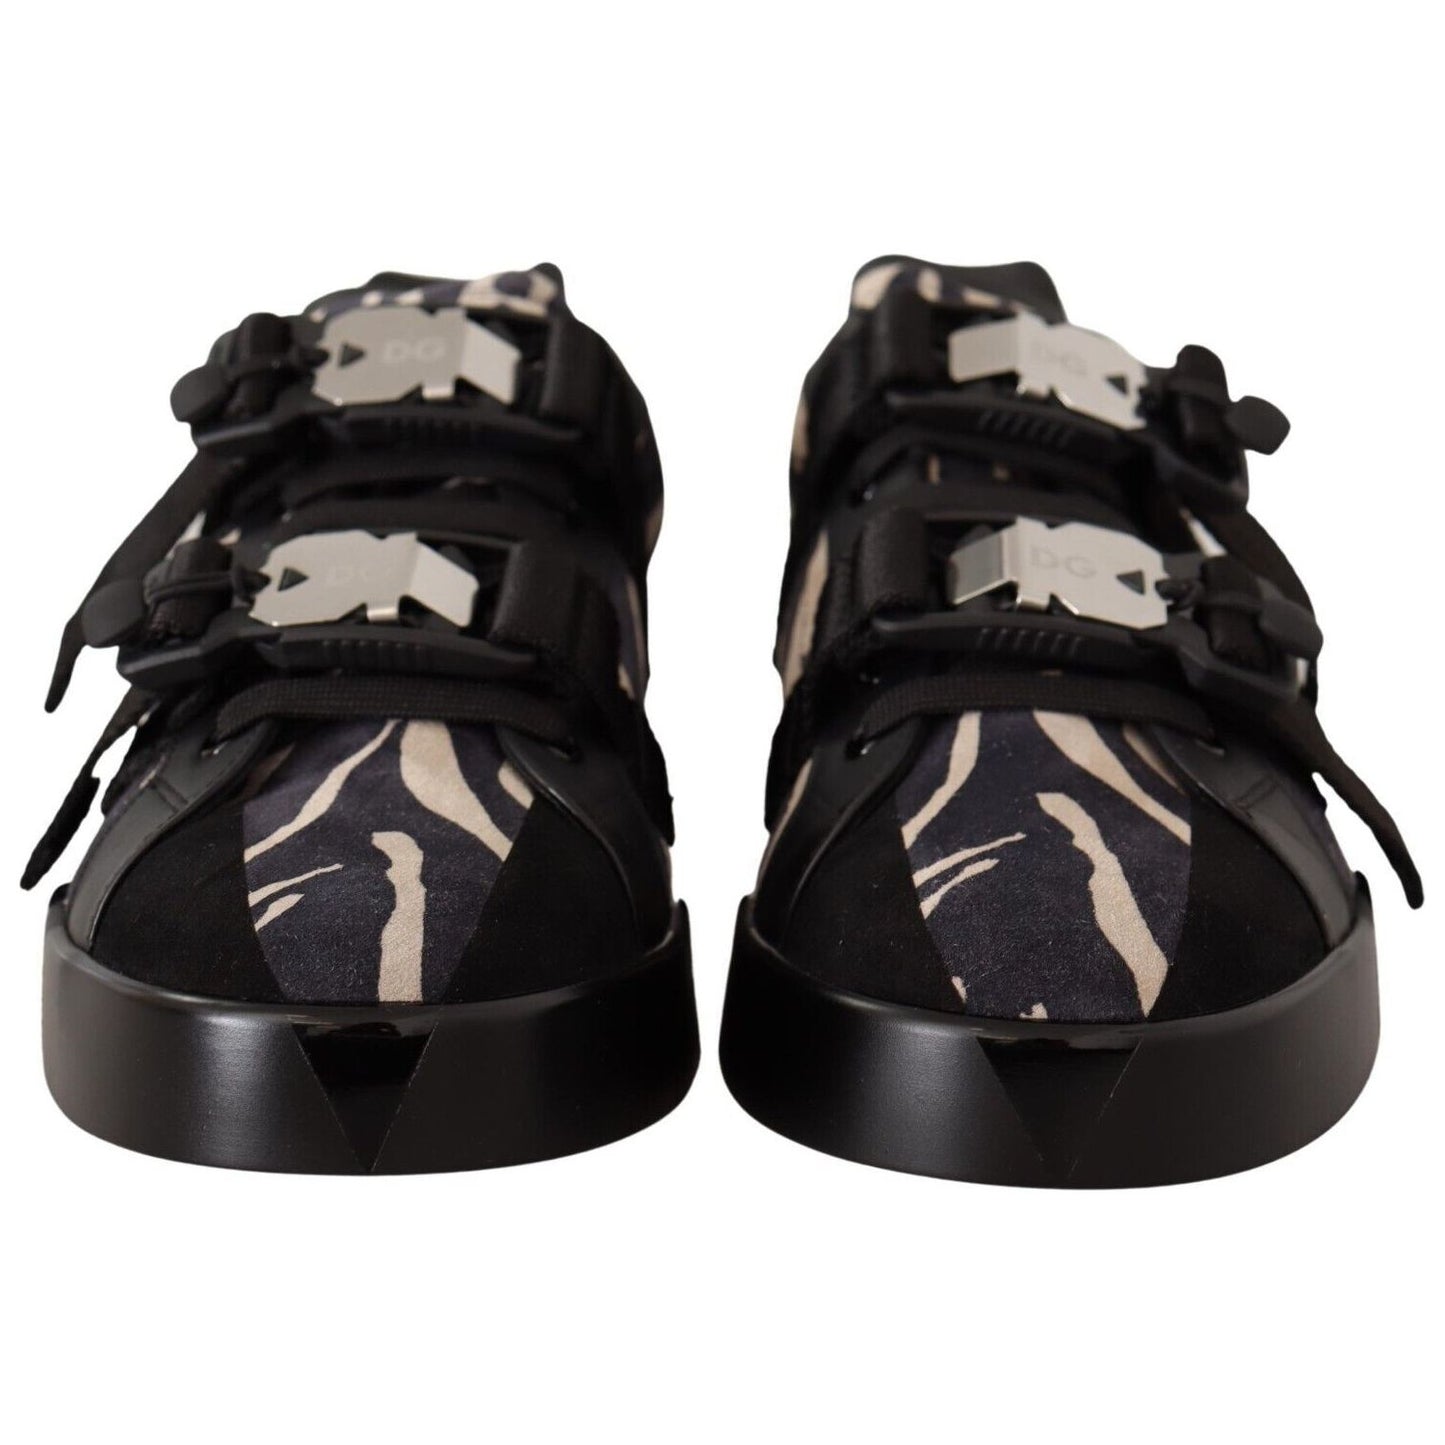 Dolce & Gabbana Zebra Suede Low Top Fashion Sneakers black-white-zebra-suede-rubber-sneakers-shoes-2 MAN SNEAKERS s-l1600-6-10-ec458309-128.jpg